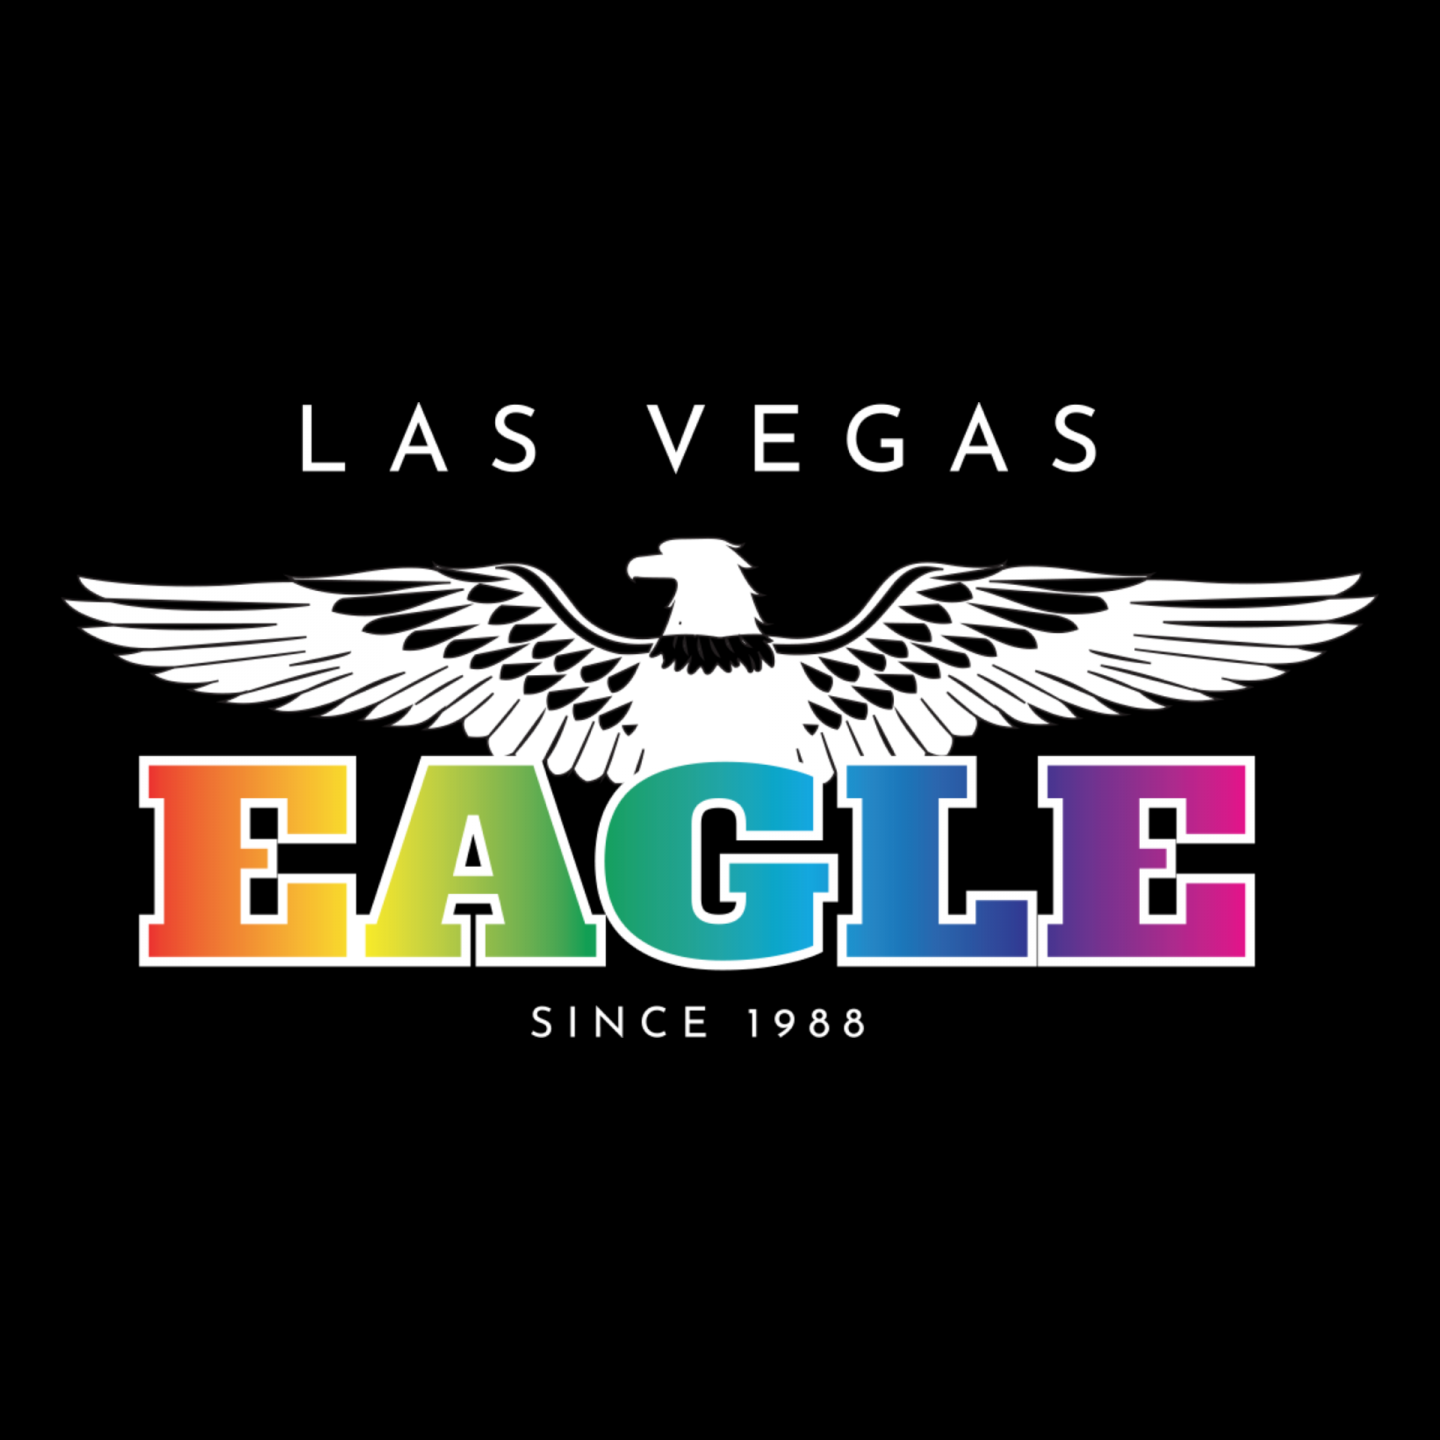 The Las Vegas Eagle